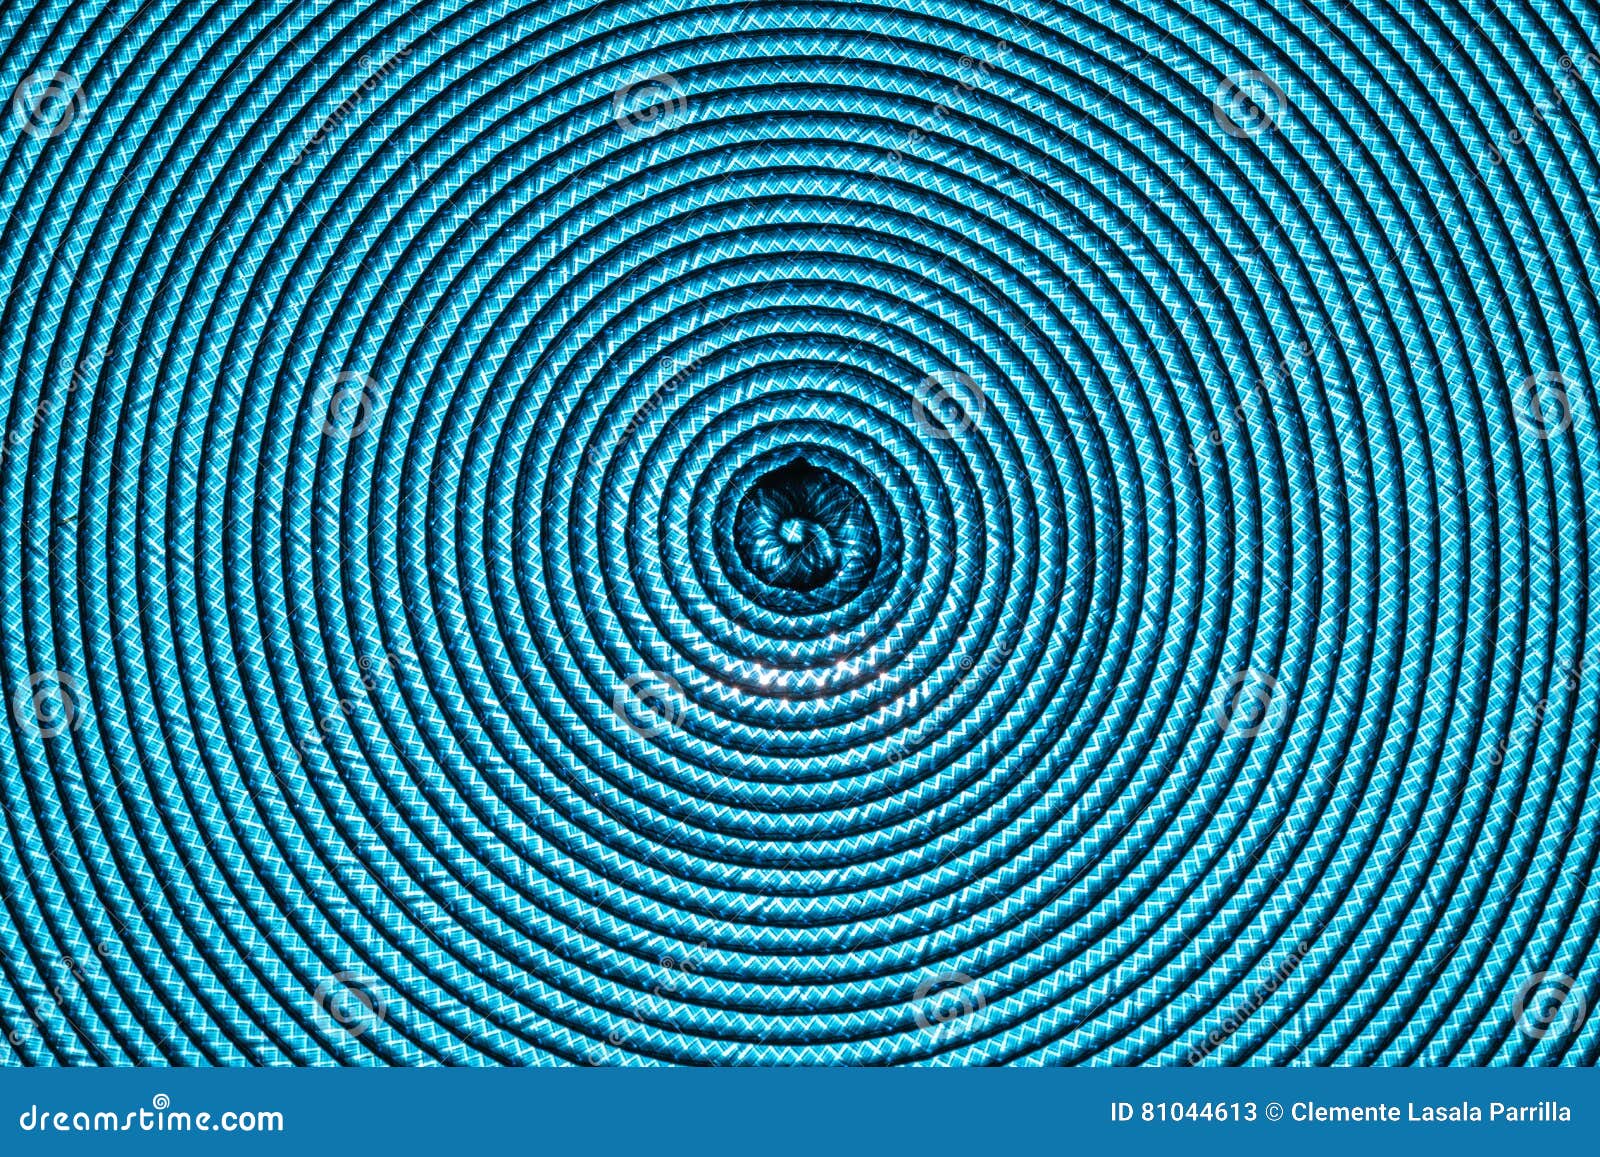 Fundo espiral abstrato azul Teste padrão radial